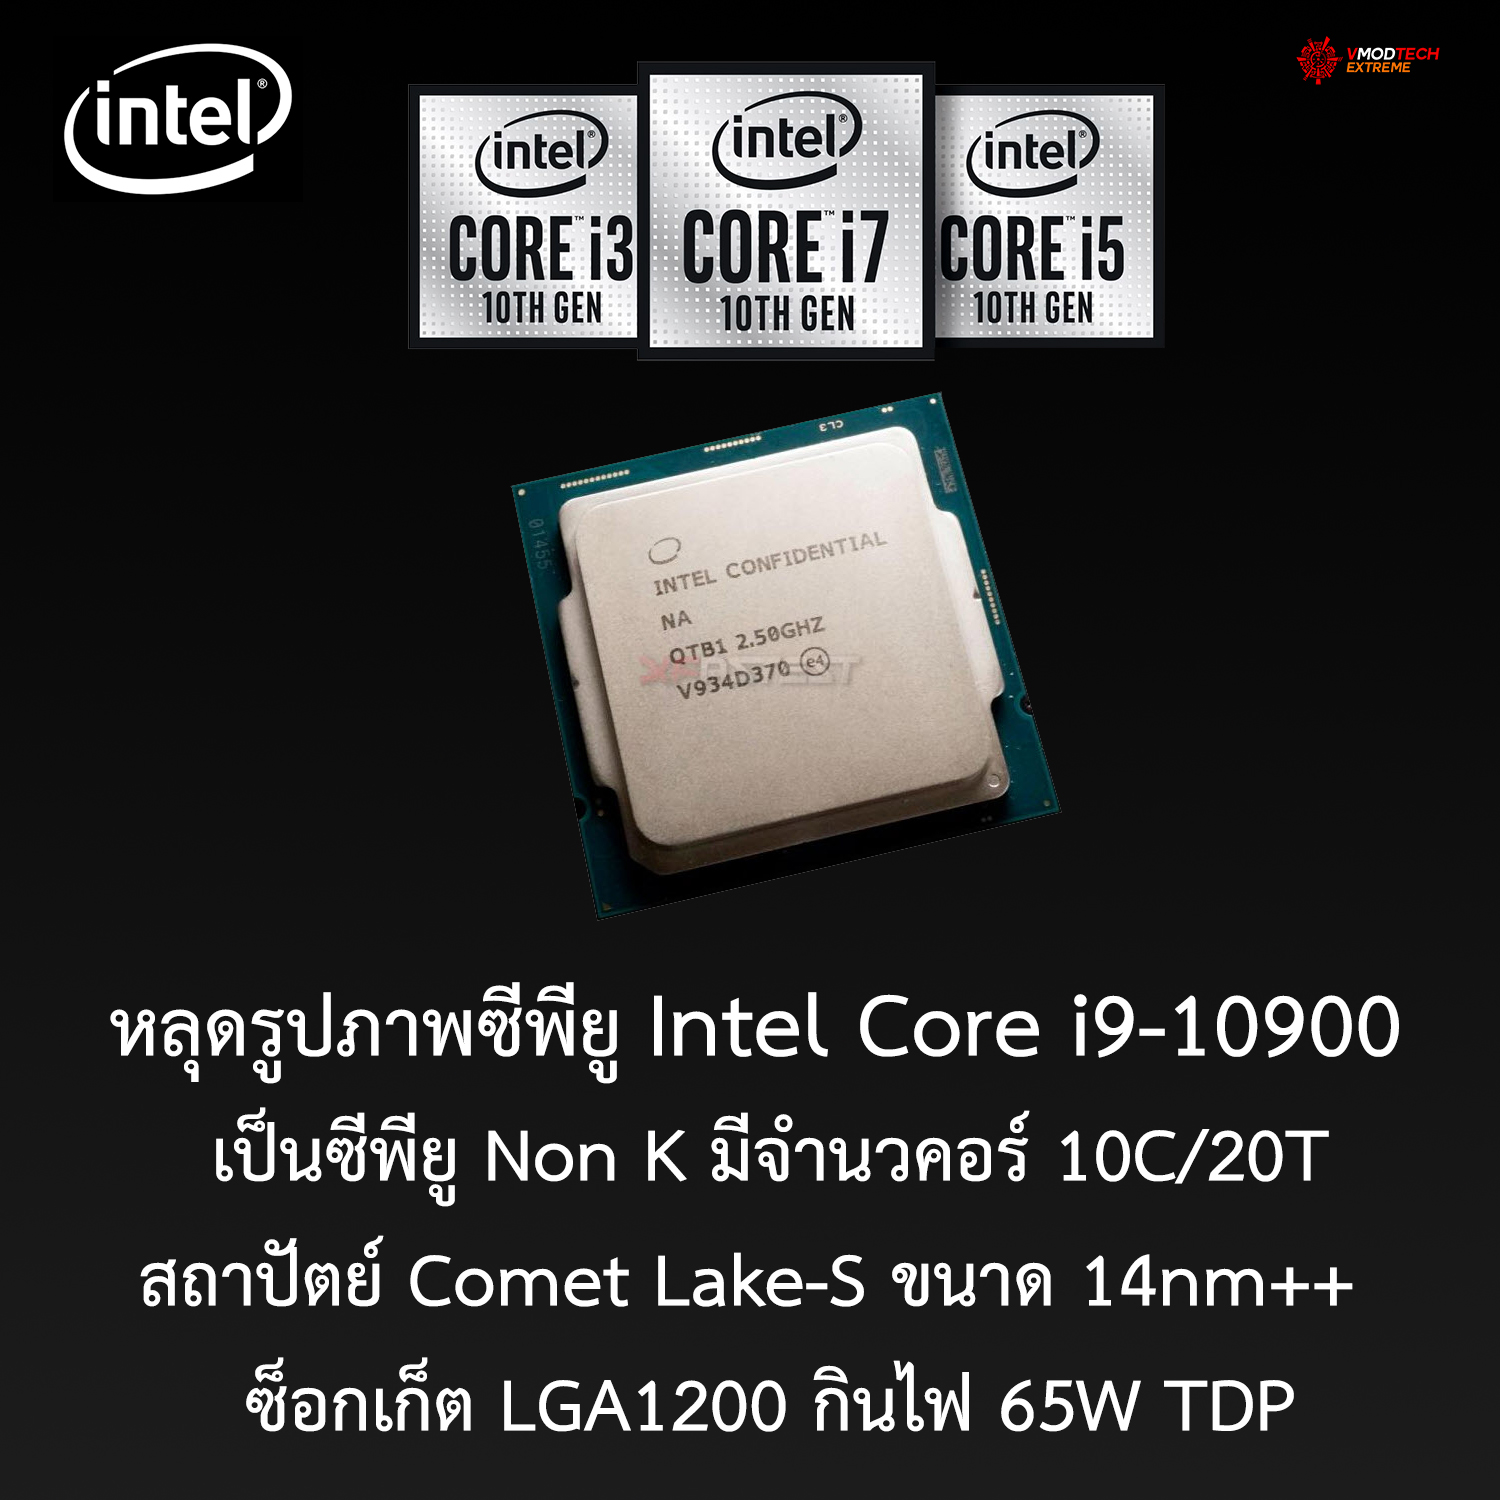 intel core i9 10900 spec1 หลุดรูปภาพซีพียู Intel Core i9 10900 อย่างไม่เป็นทางการ